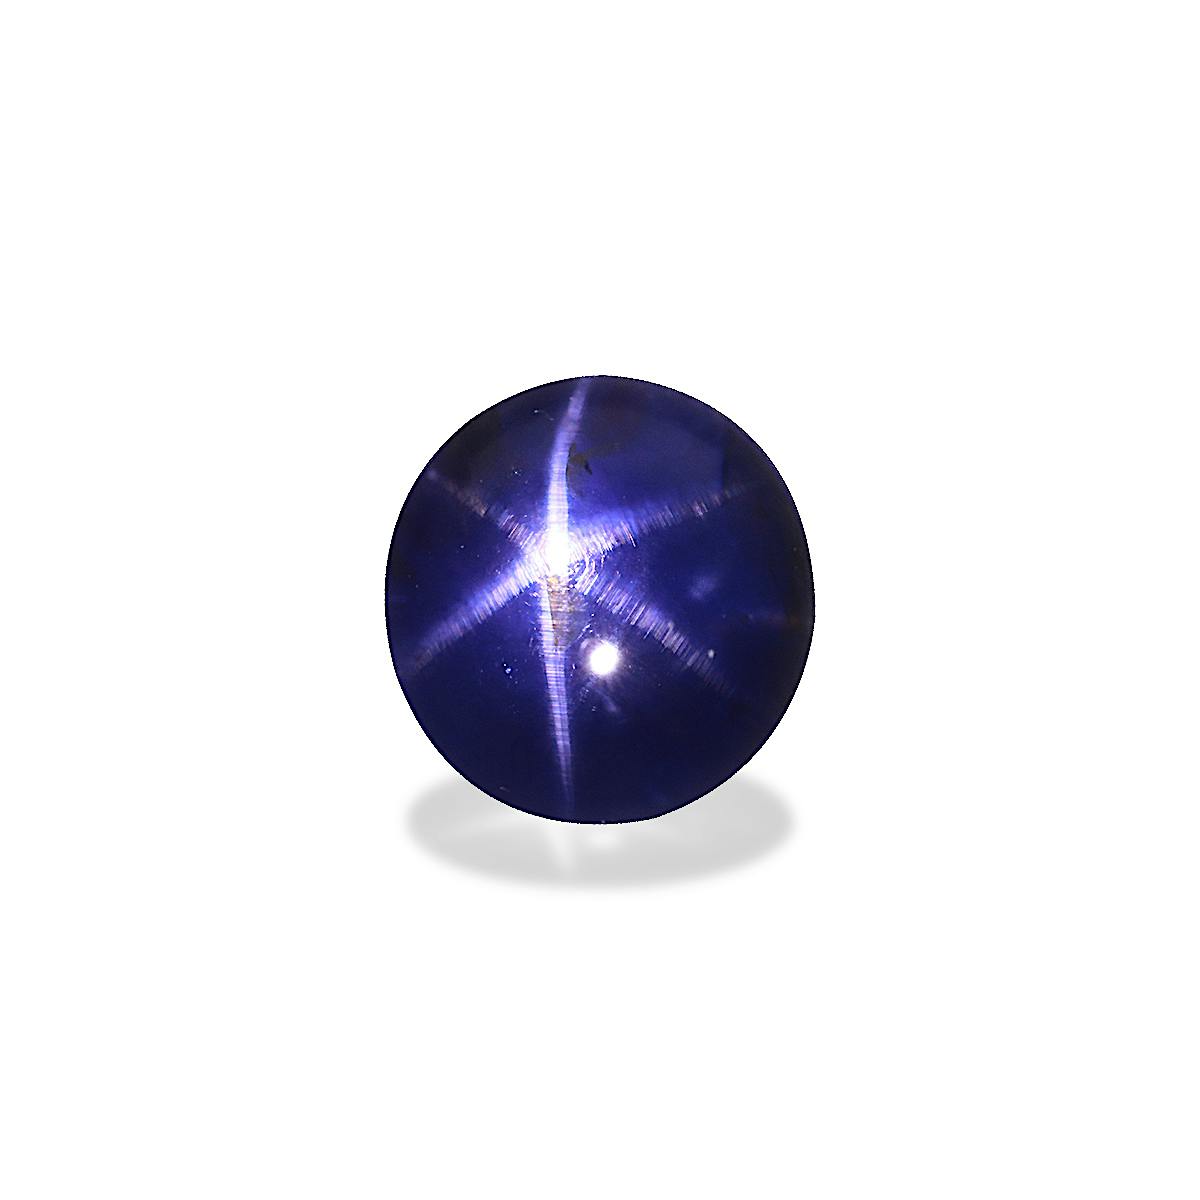 Blue Star Sapphire 8.20ct (BR0085)